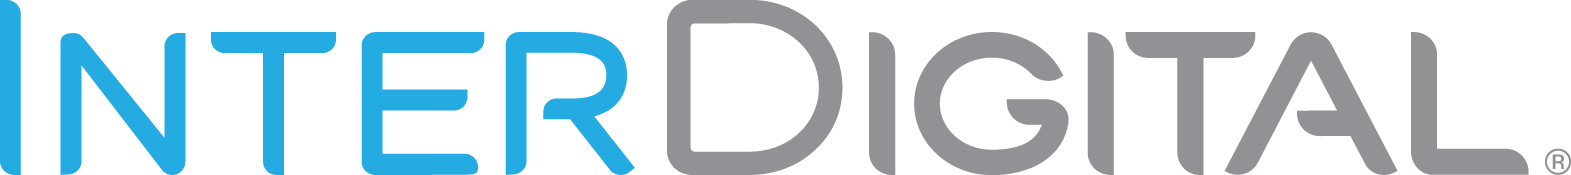 Interdigital Brand Logo